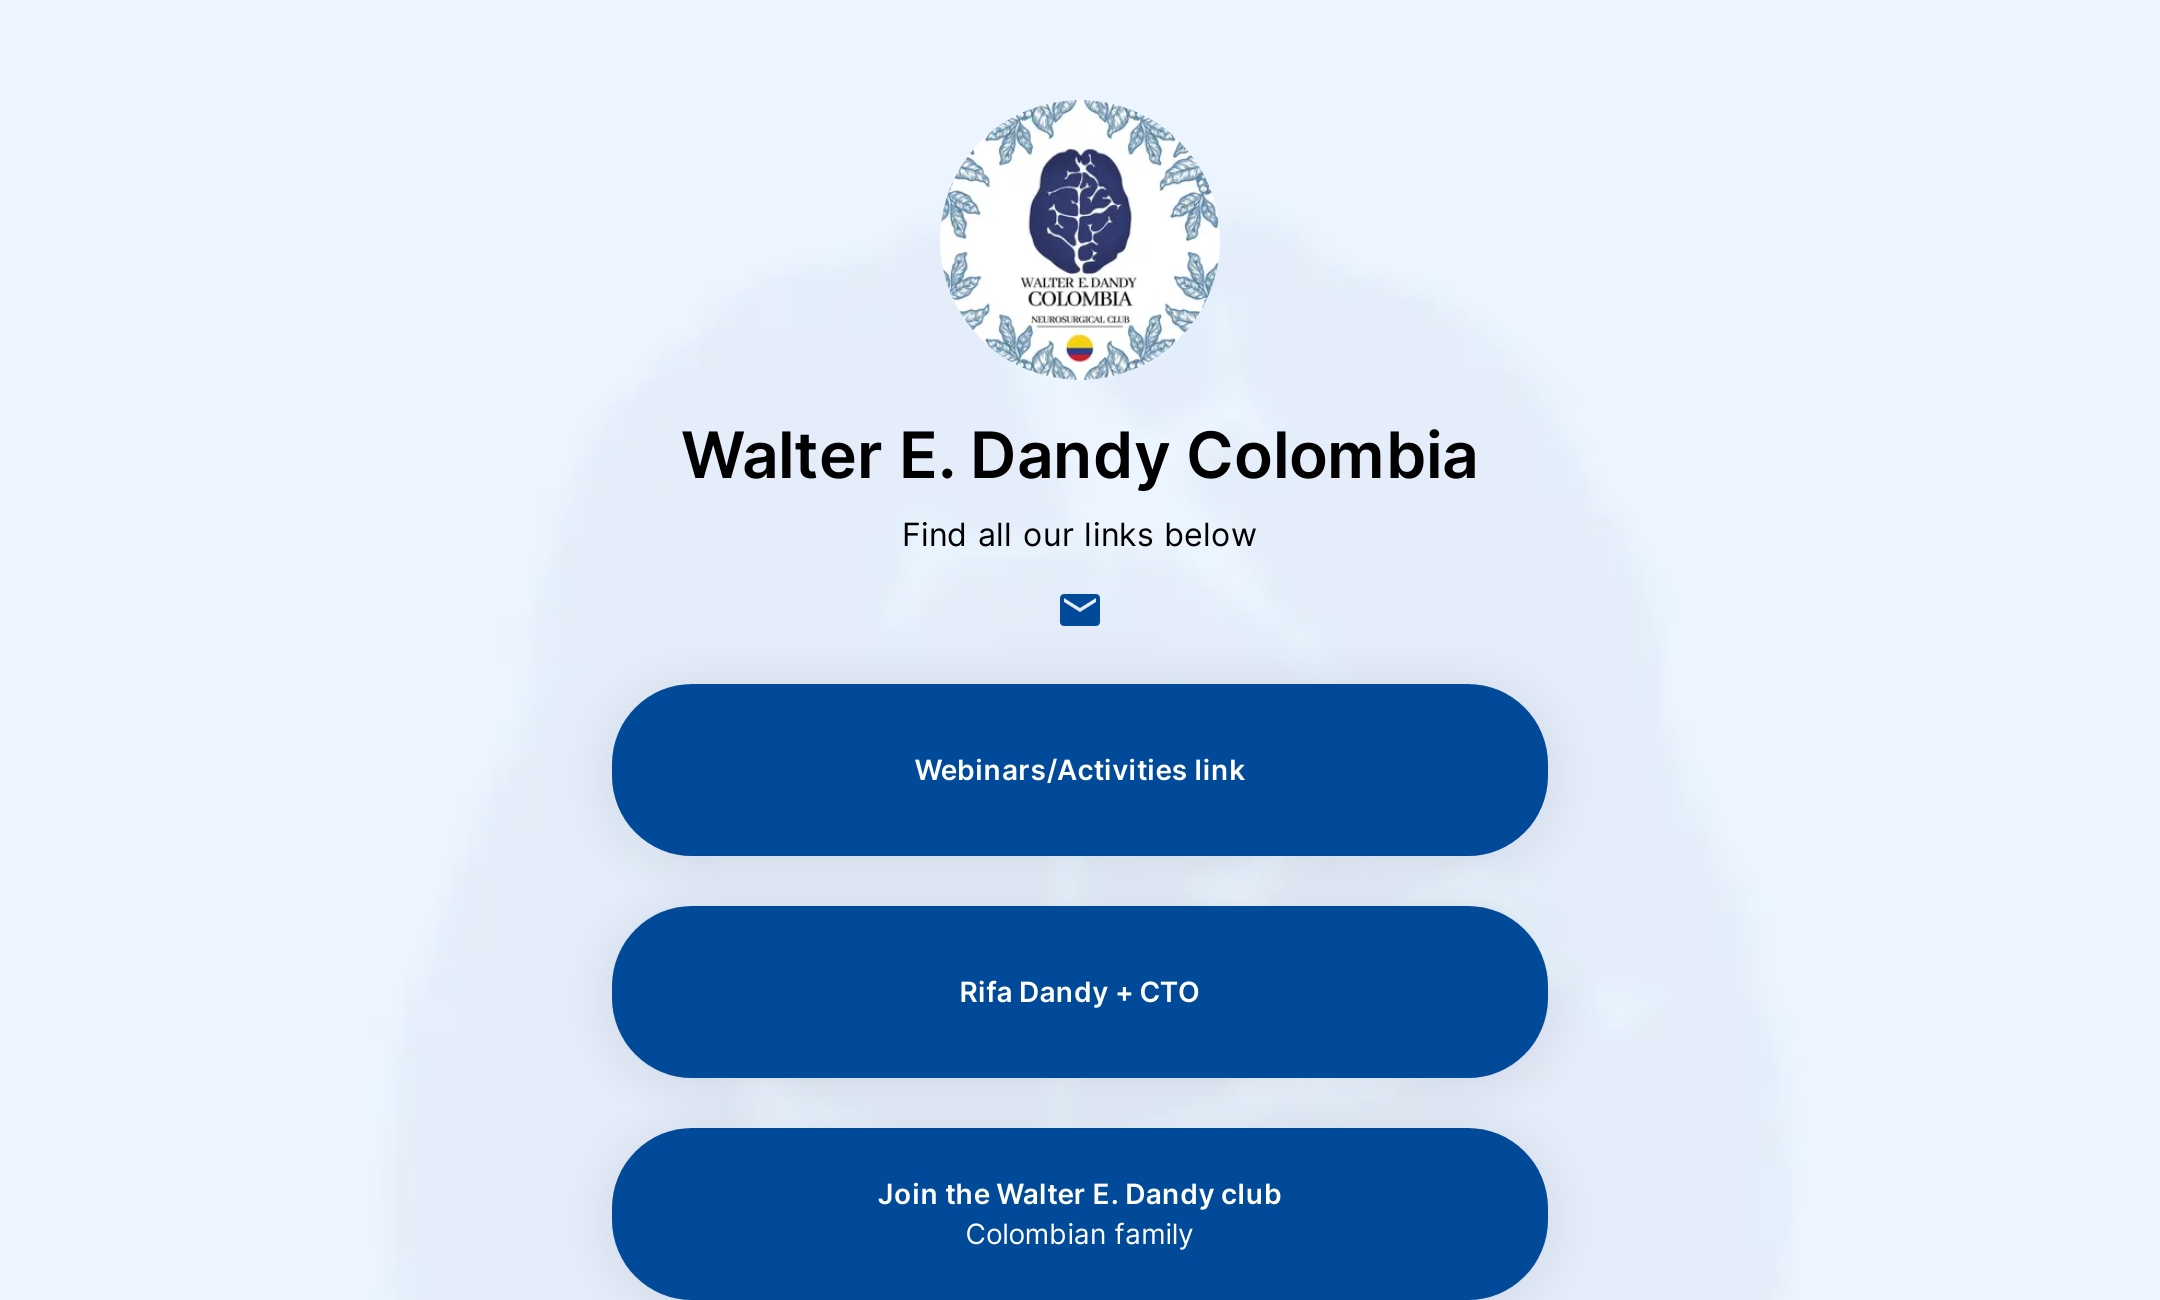 Walter E. Dandy Colombia's Flowpage